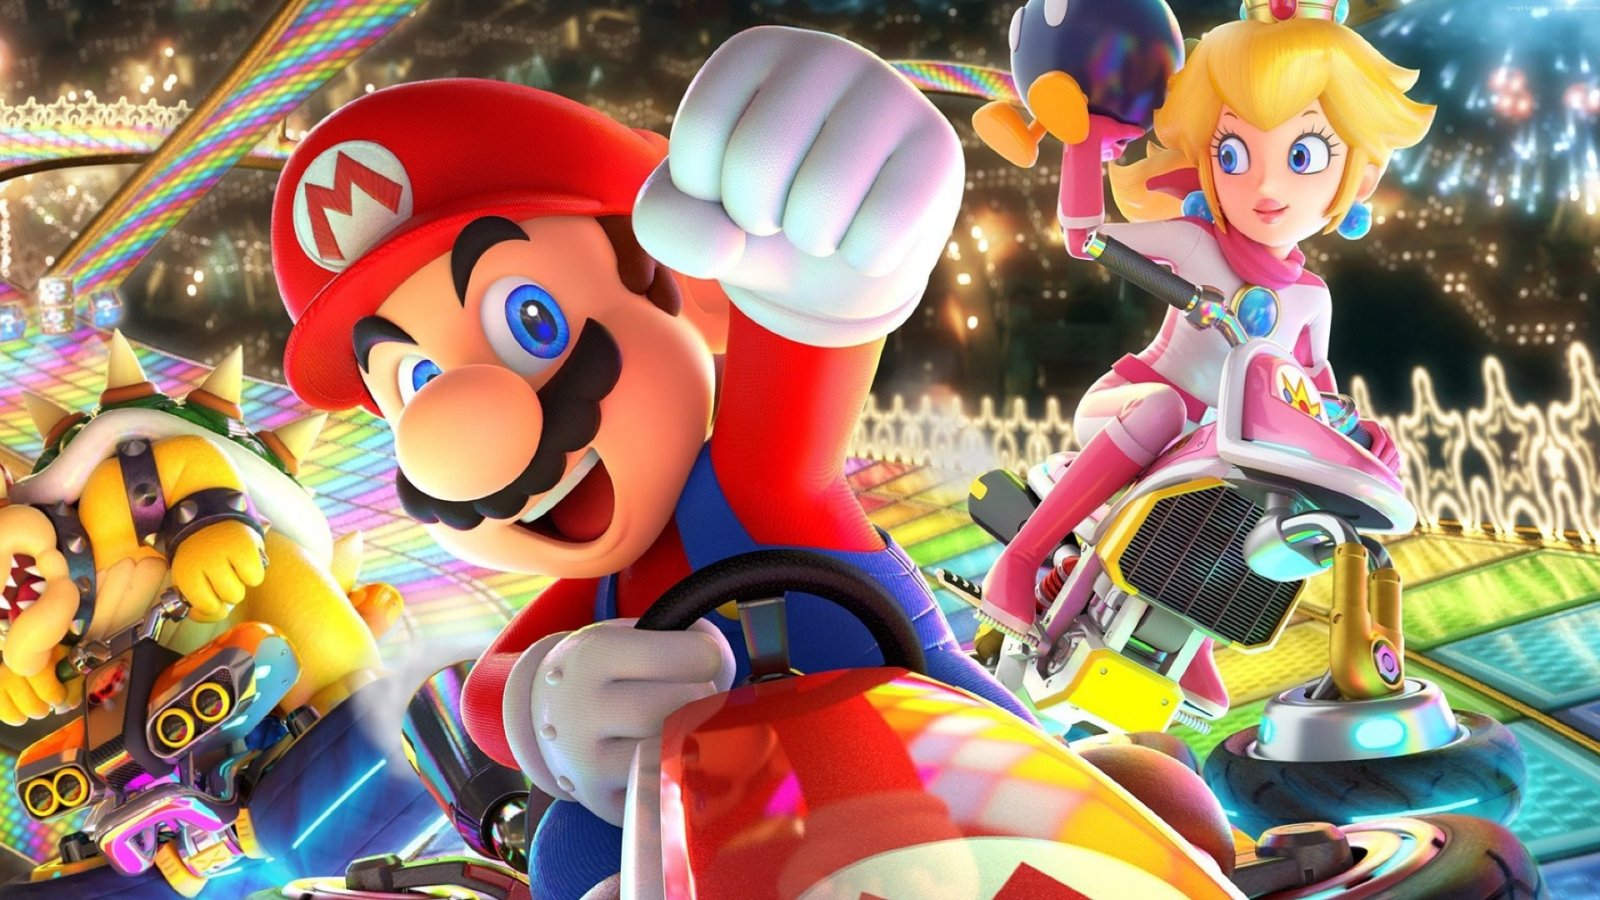 Classifica inglese: l'immortale Mario Kart 8 torna in testa, metà top 10 è di Nintendo Switch